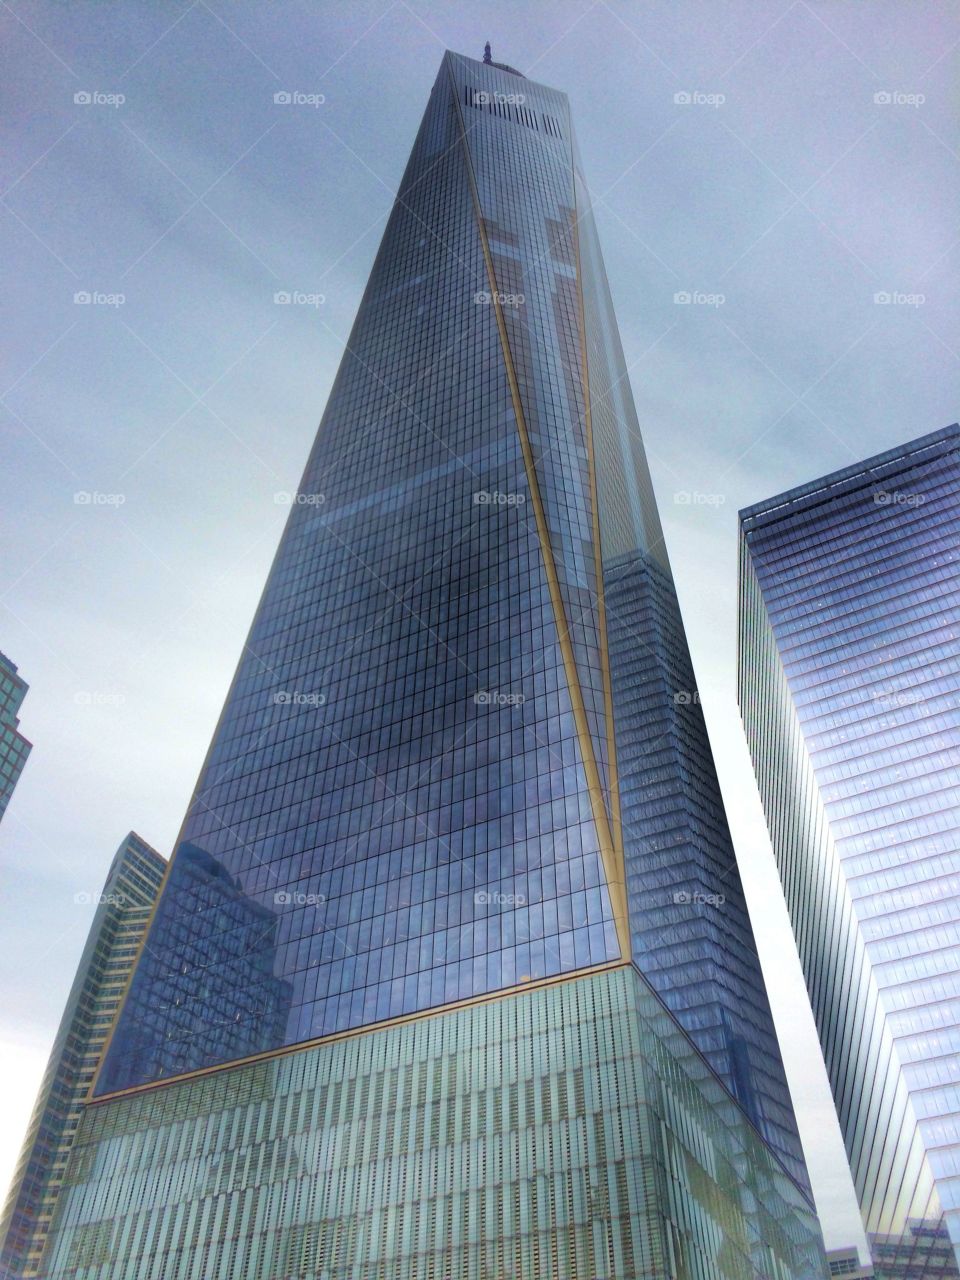 World Trade Center 1, Freedom Tower